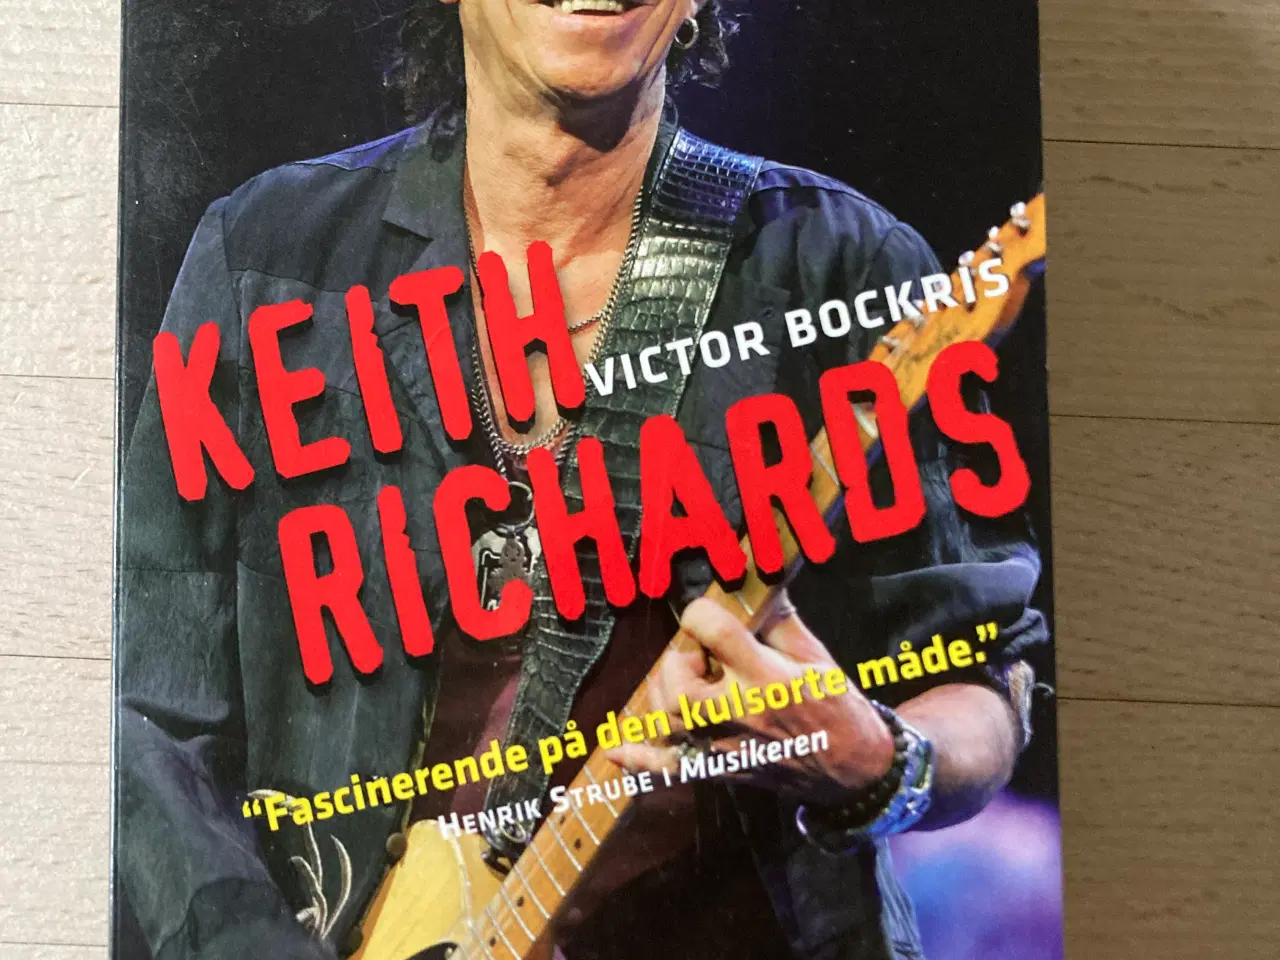 Billede 1 - Keith Richards en biografi